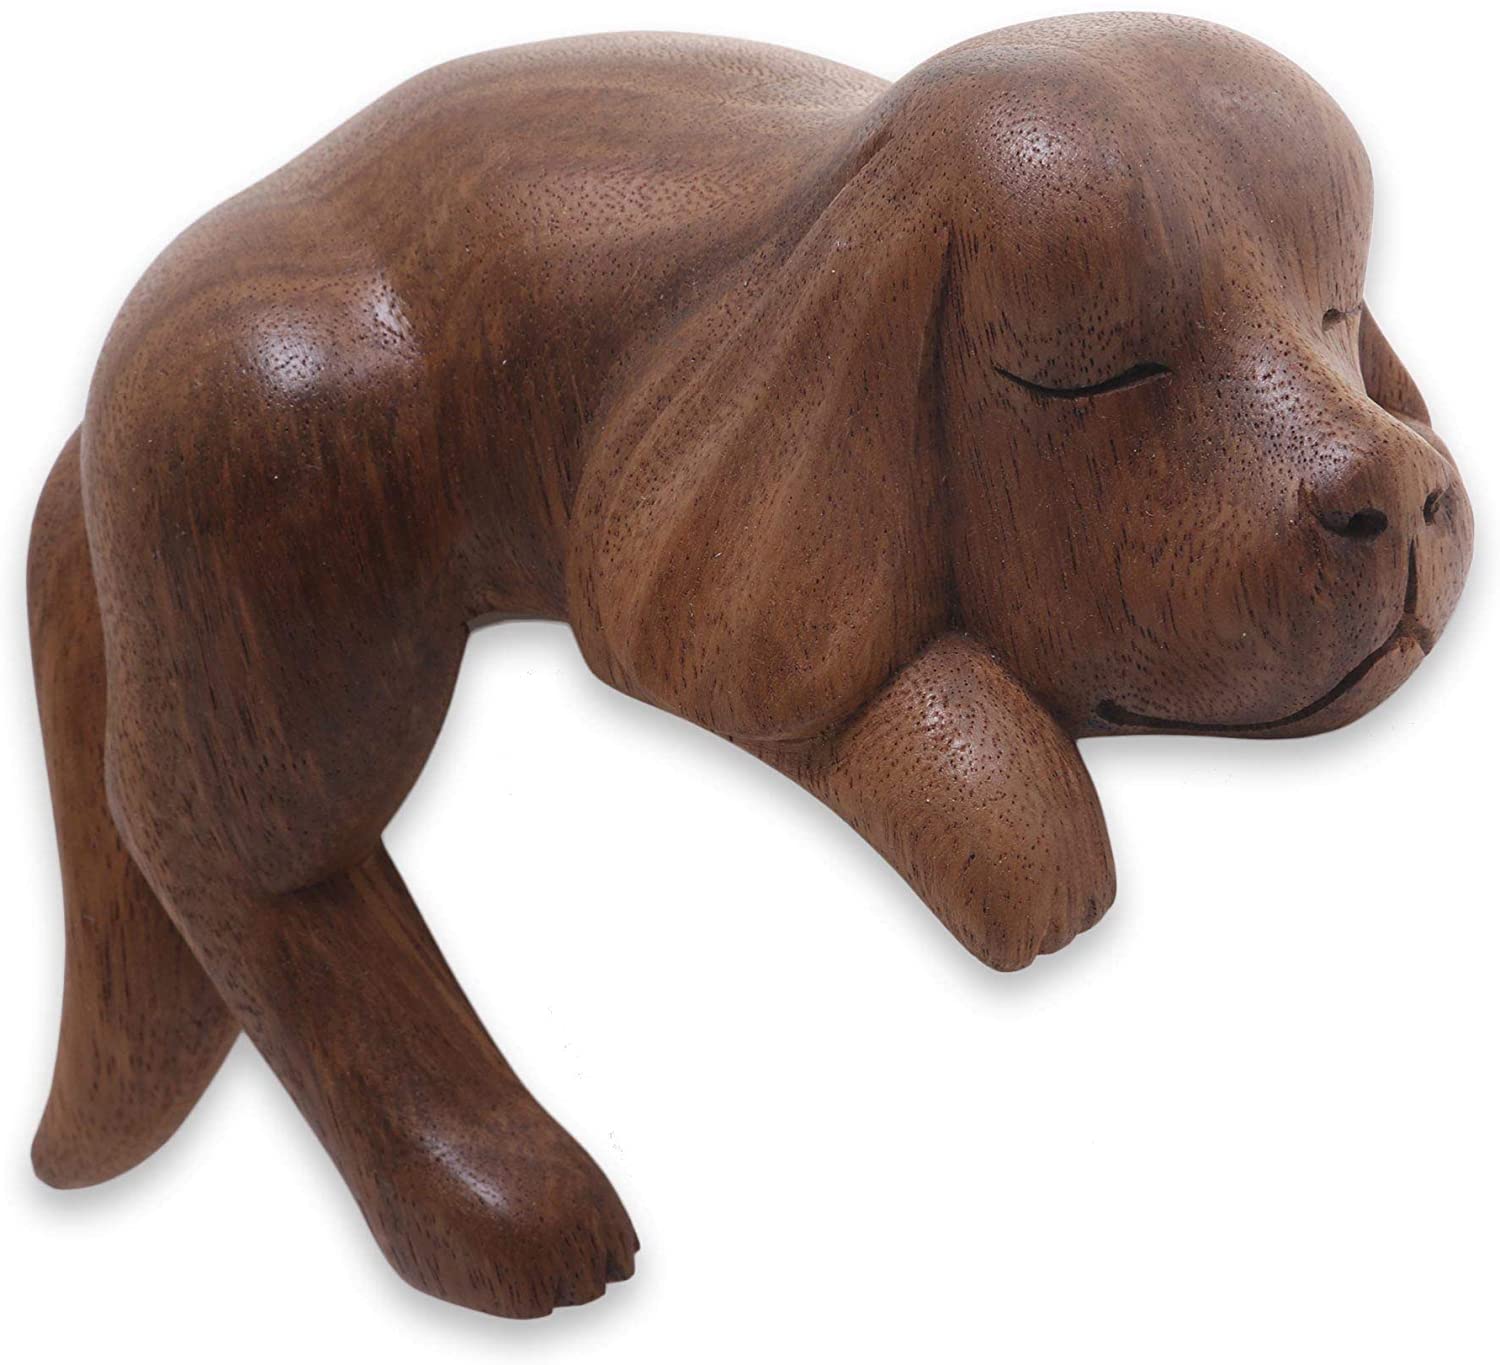 MISC Handmade Wood Sculpture Sleepy Spaniel (Indonesia) Brown